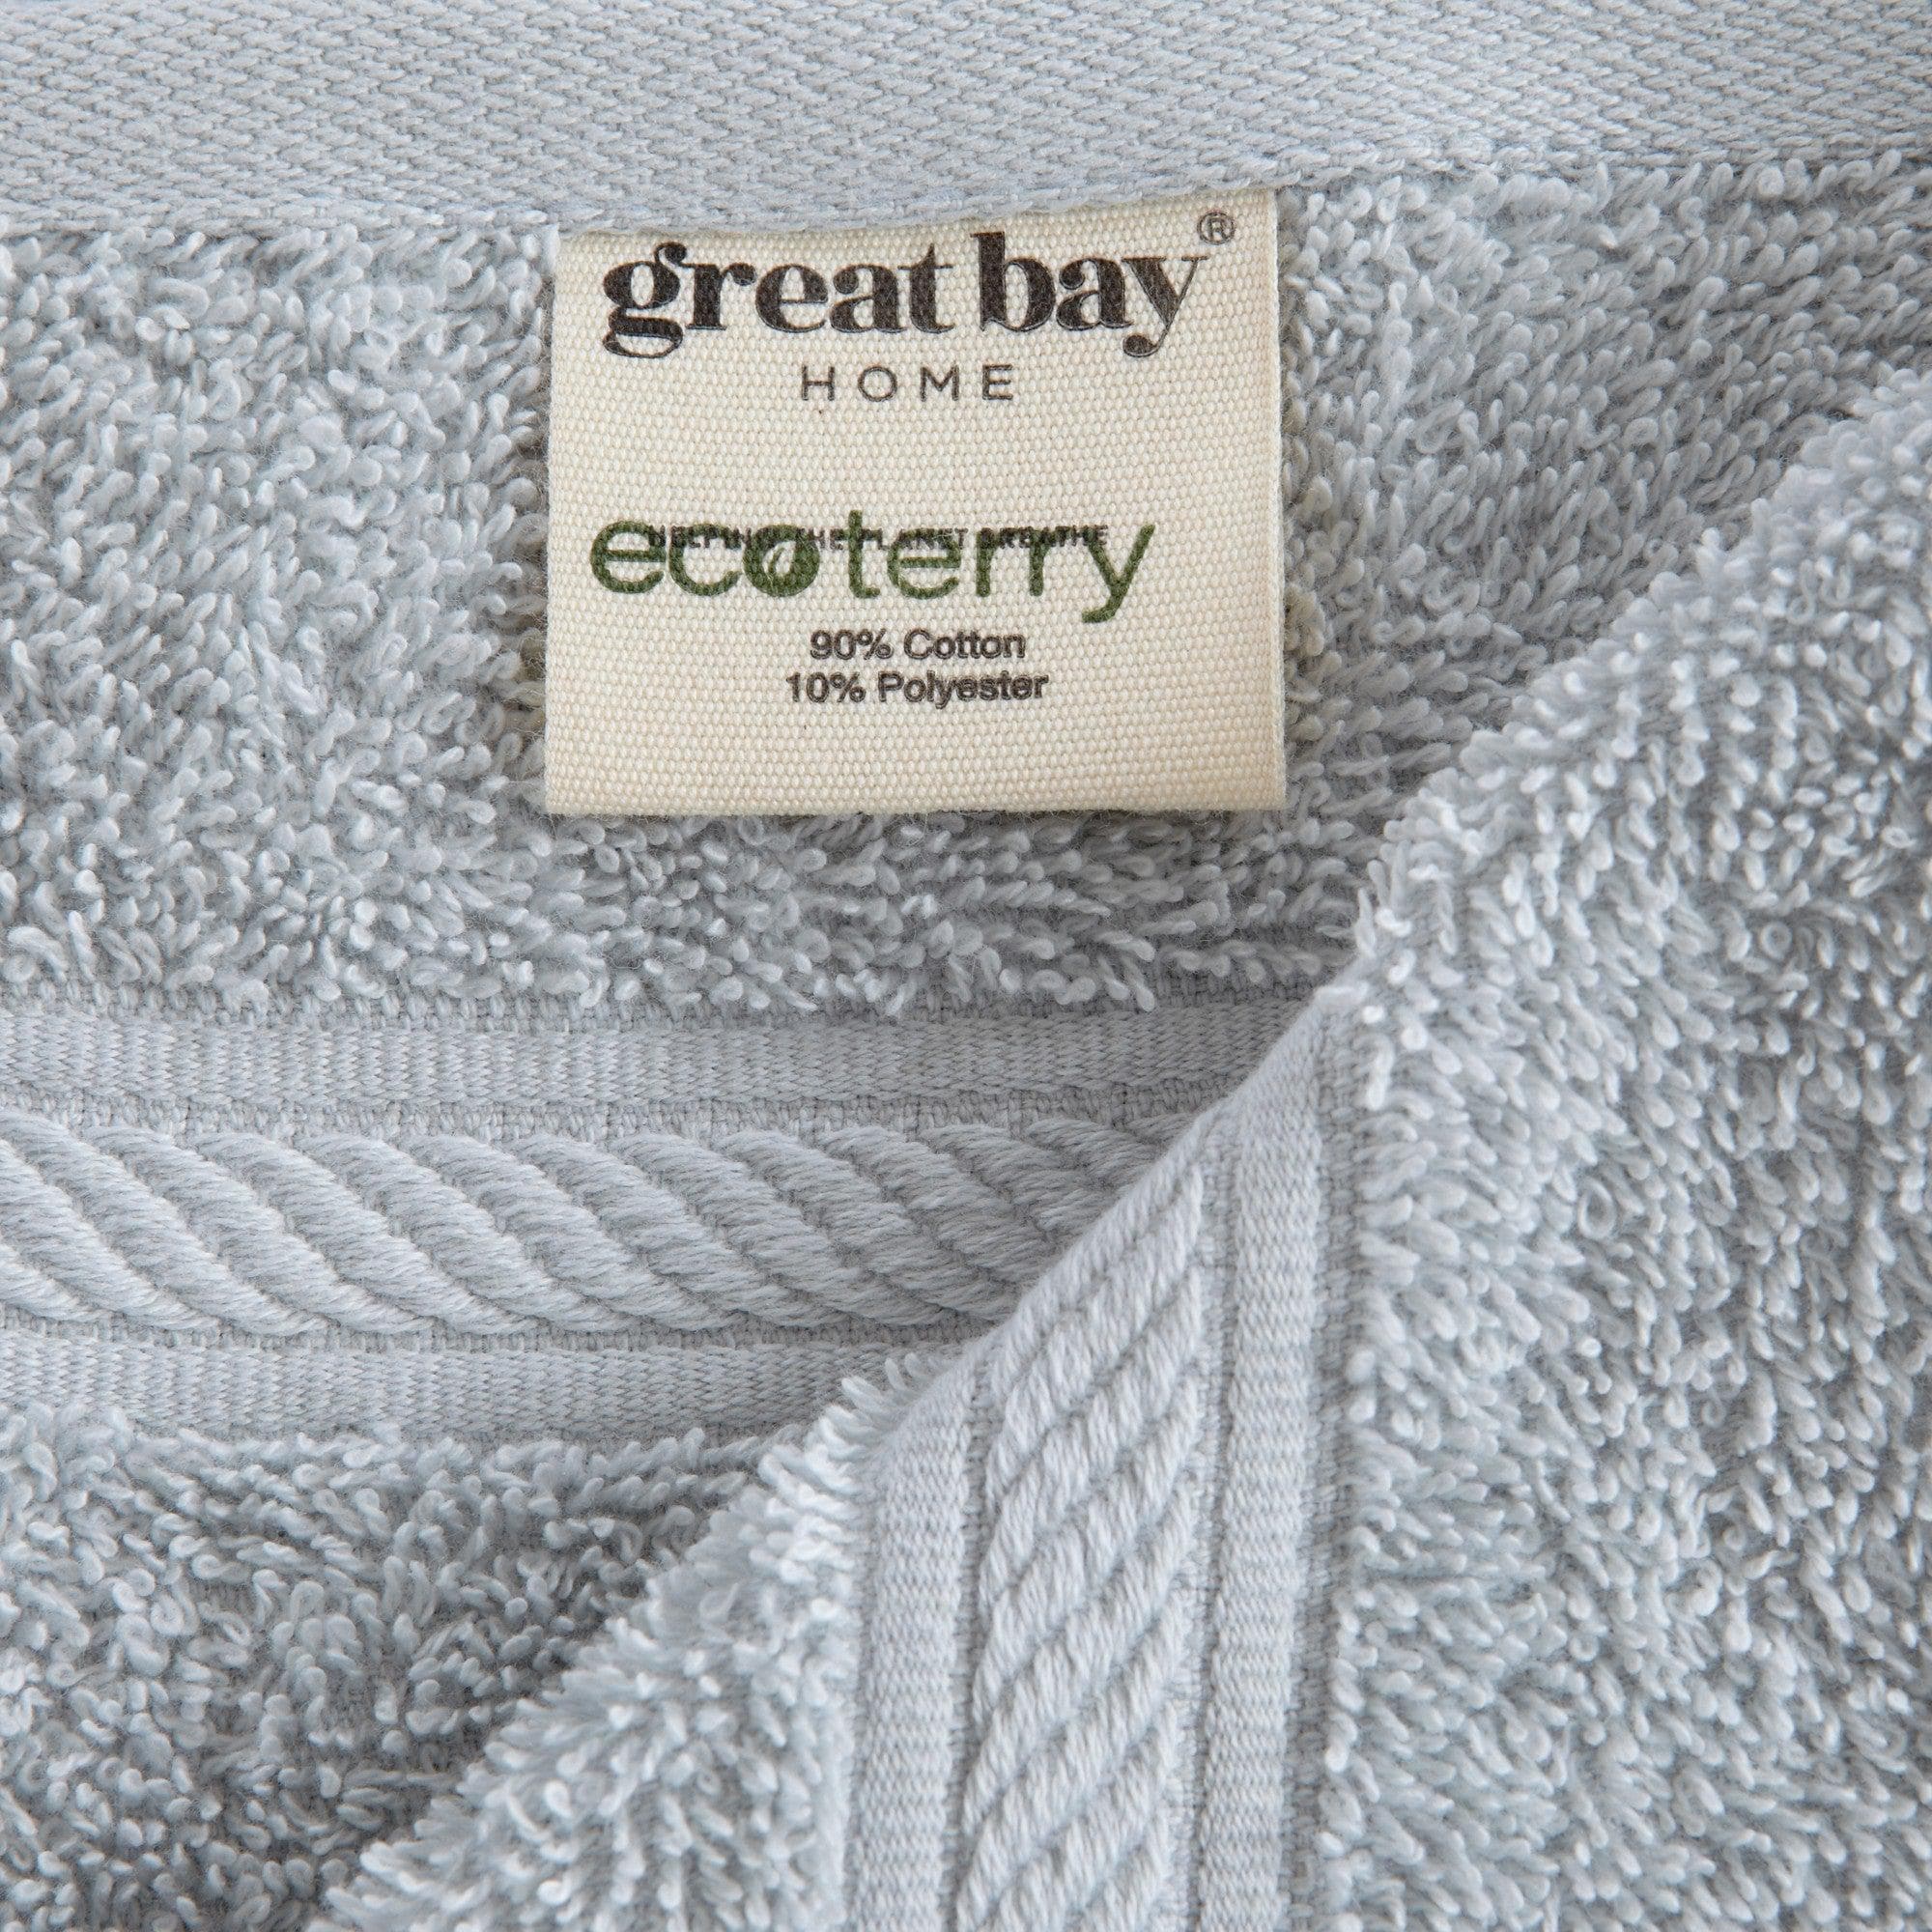 New Product Alert! - PureSoft Bath Towels – Great Bay Home